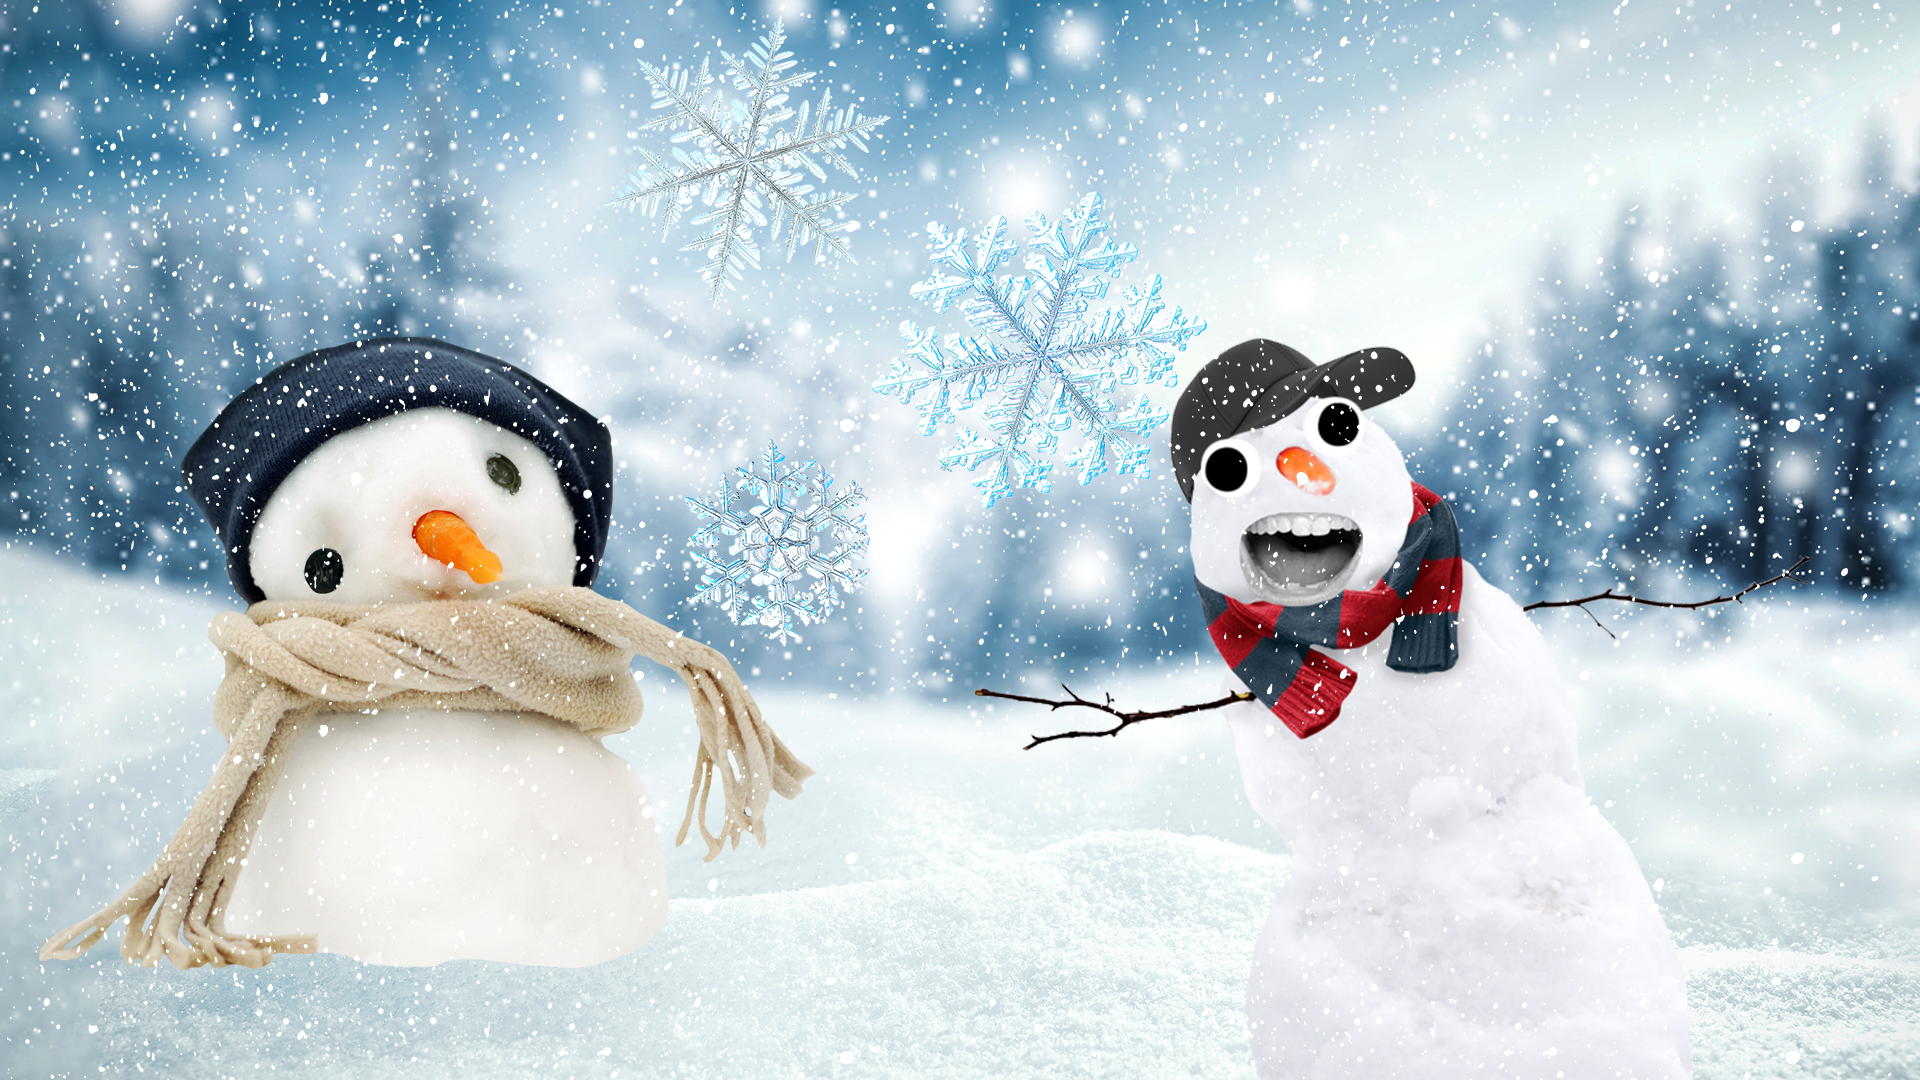 Beano snowmen in snowy scene 